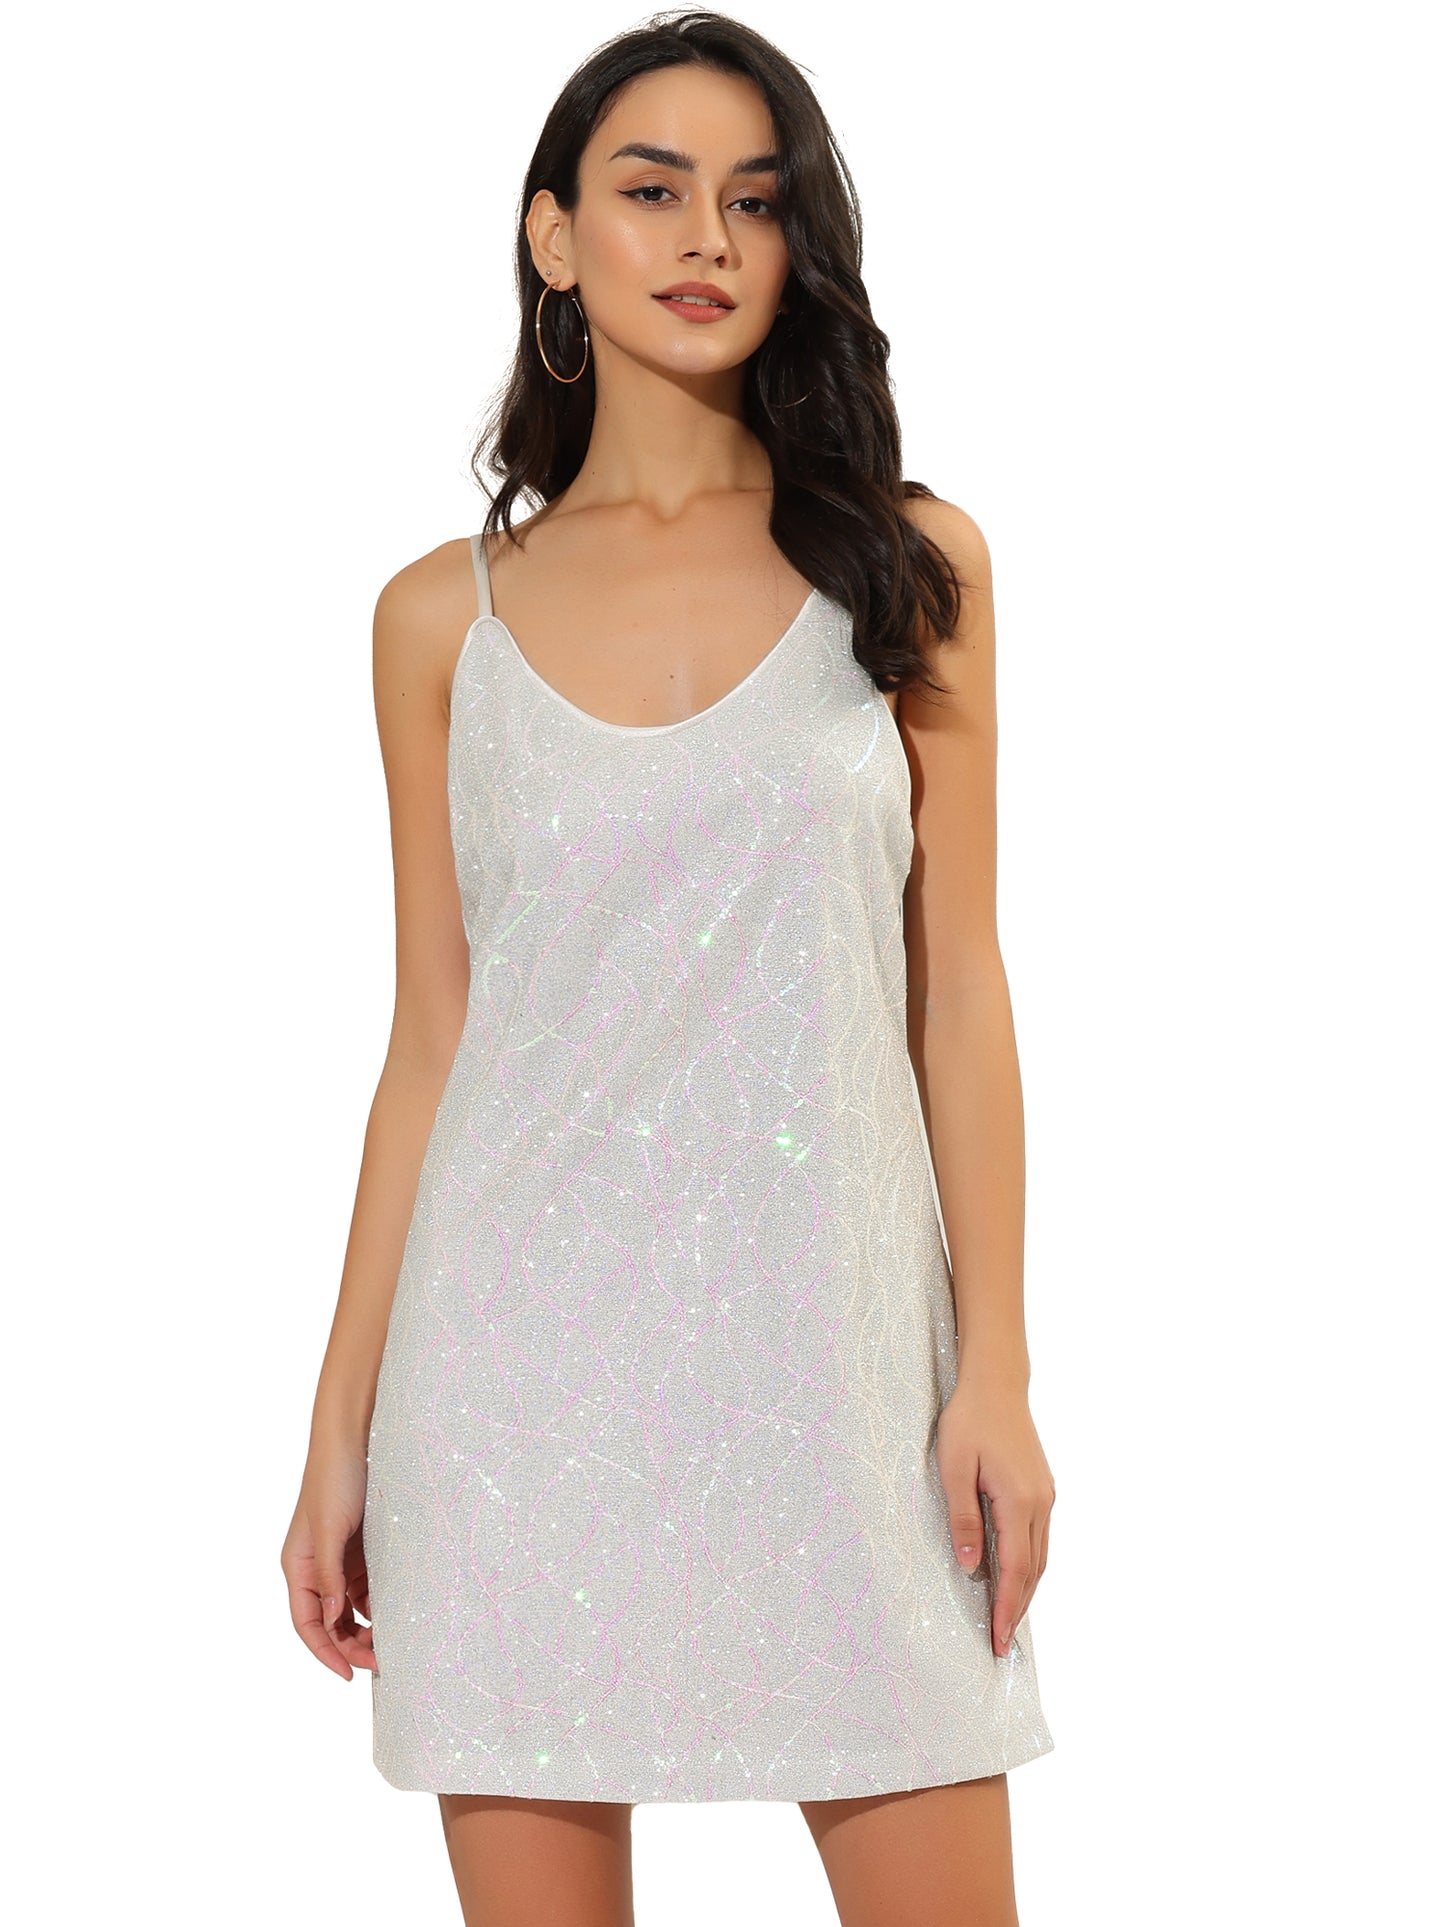 Allegra K Glitter Sequin Dress V Neck Spaghetti Strap Mini Party Dress Clubwear White (with pinks)